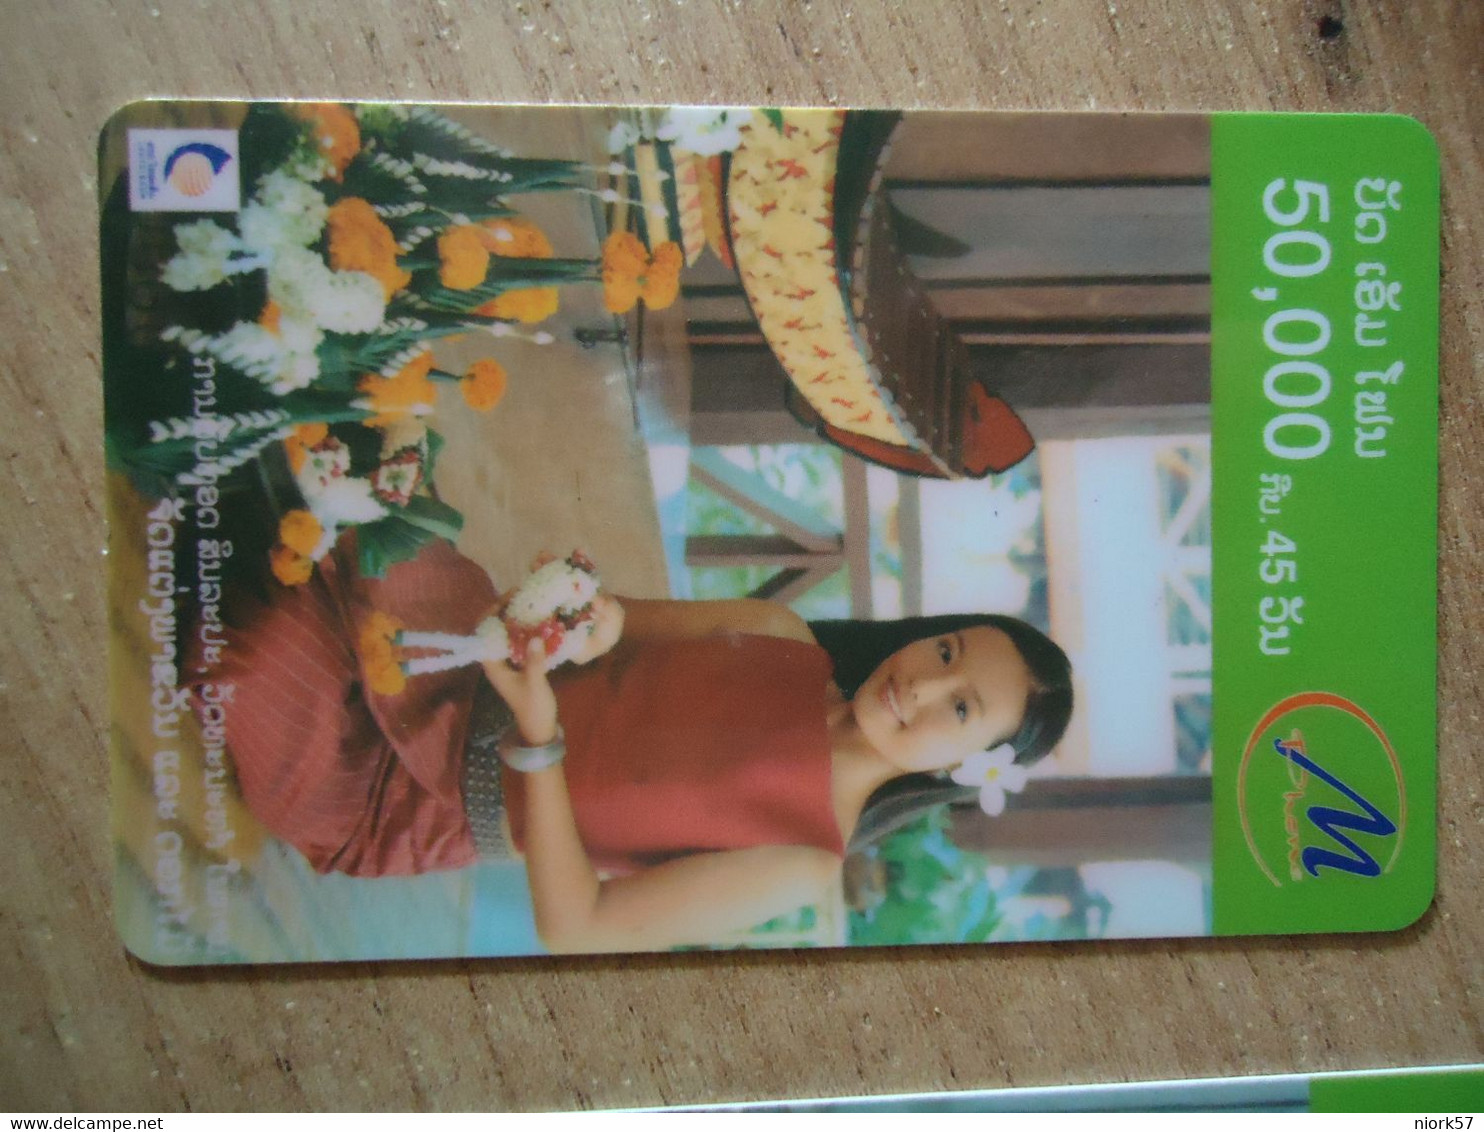 LAOS USED CARDS WOMEN - Laos